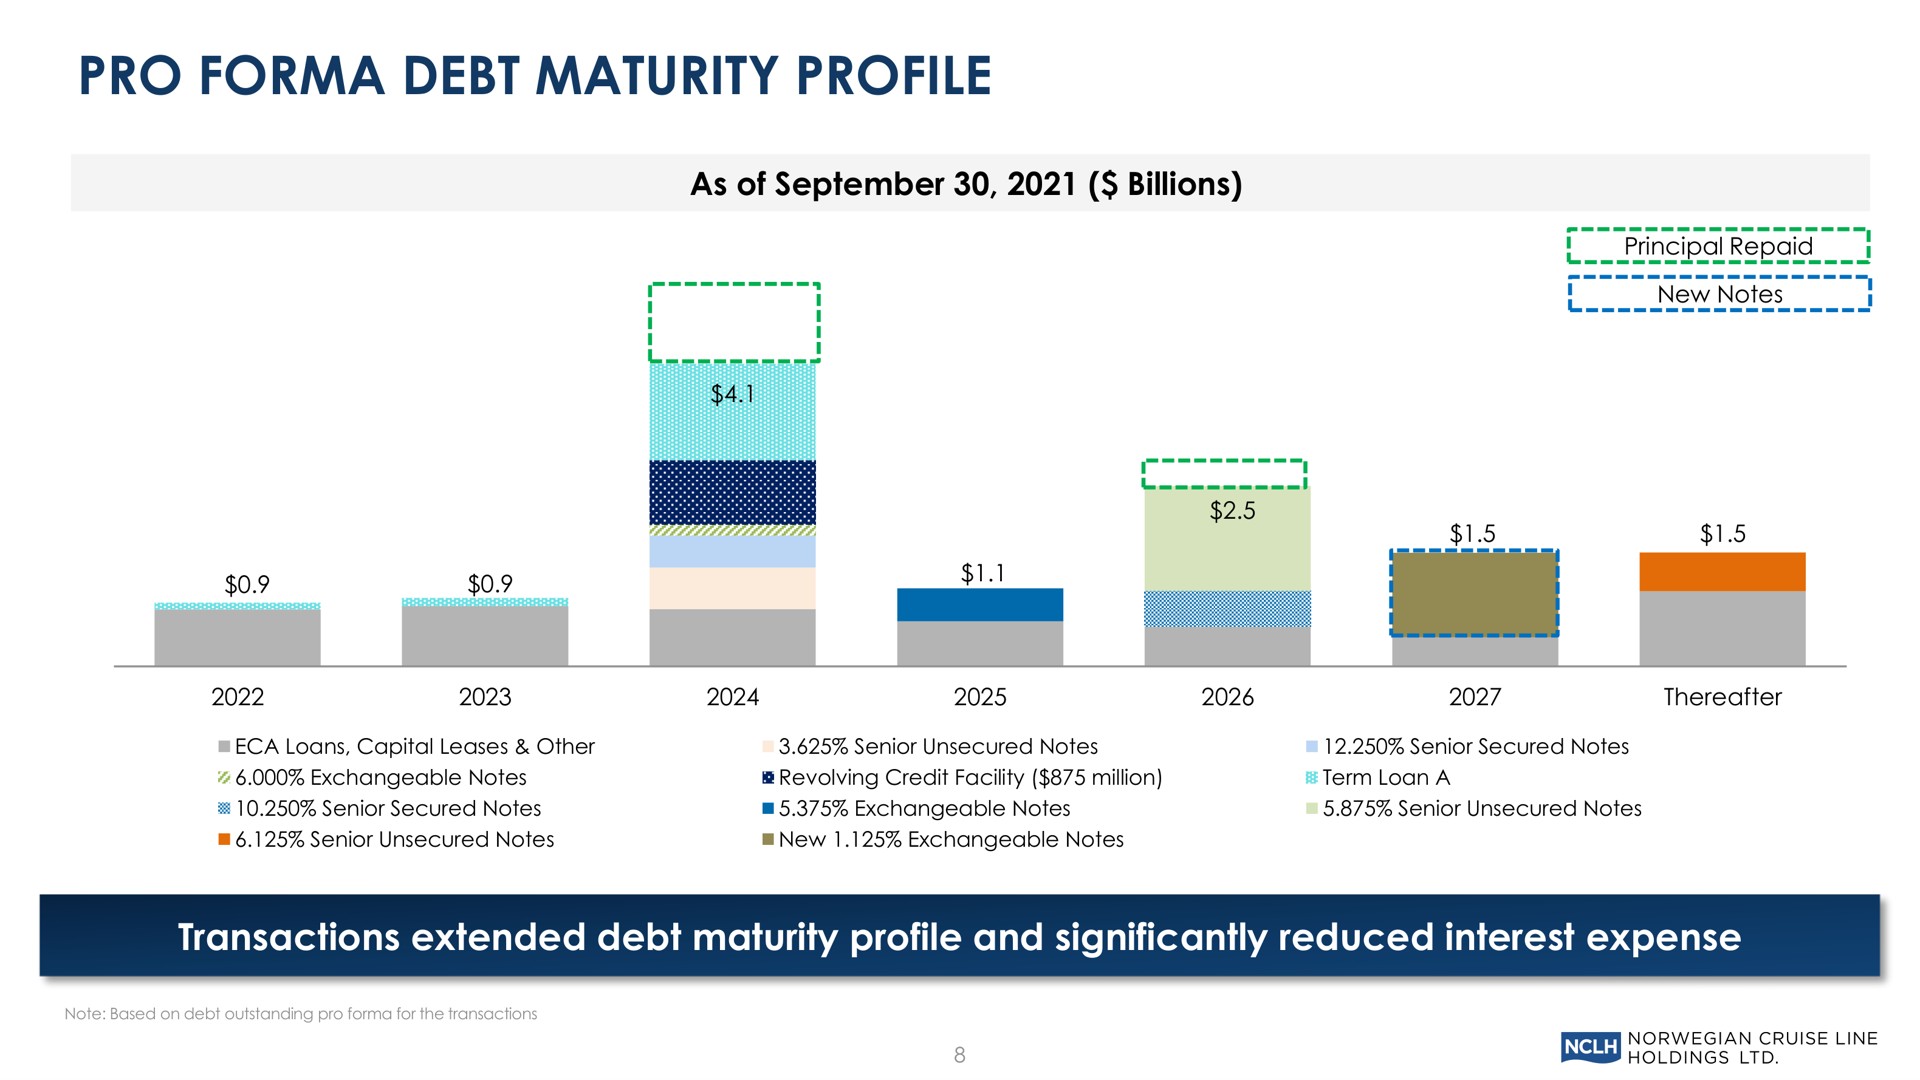 pro debt maturity profile transactions extended debt maturity profile and significantly reduced interest expense new notes | Norwegian Cruise Line